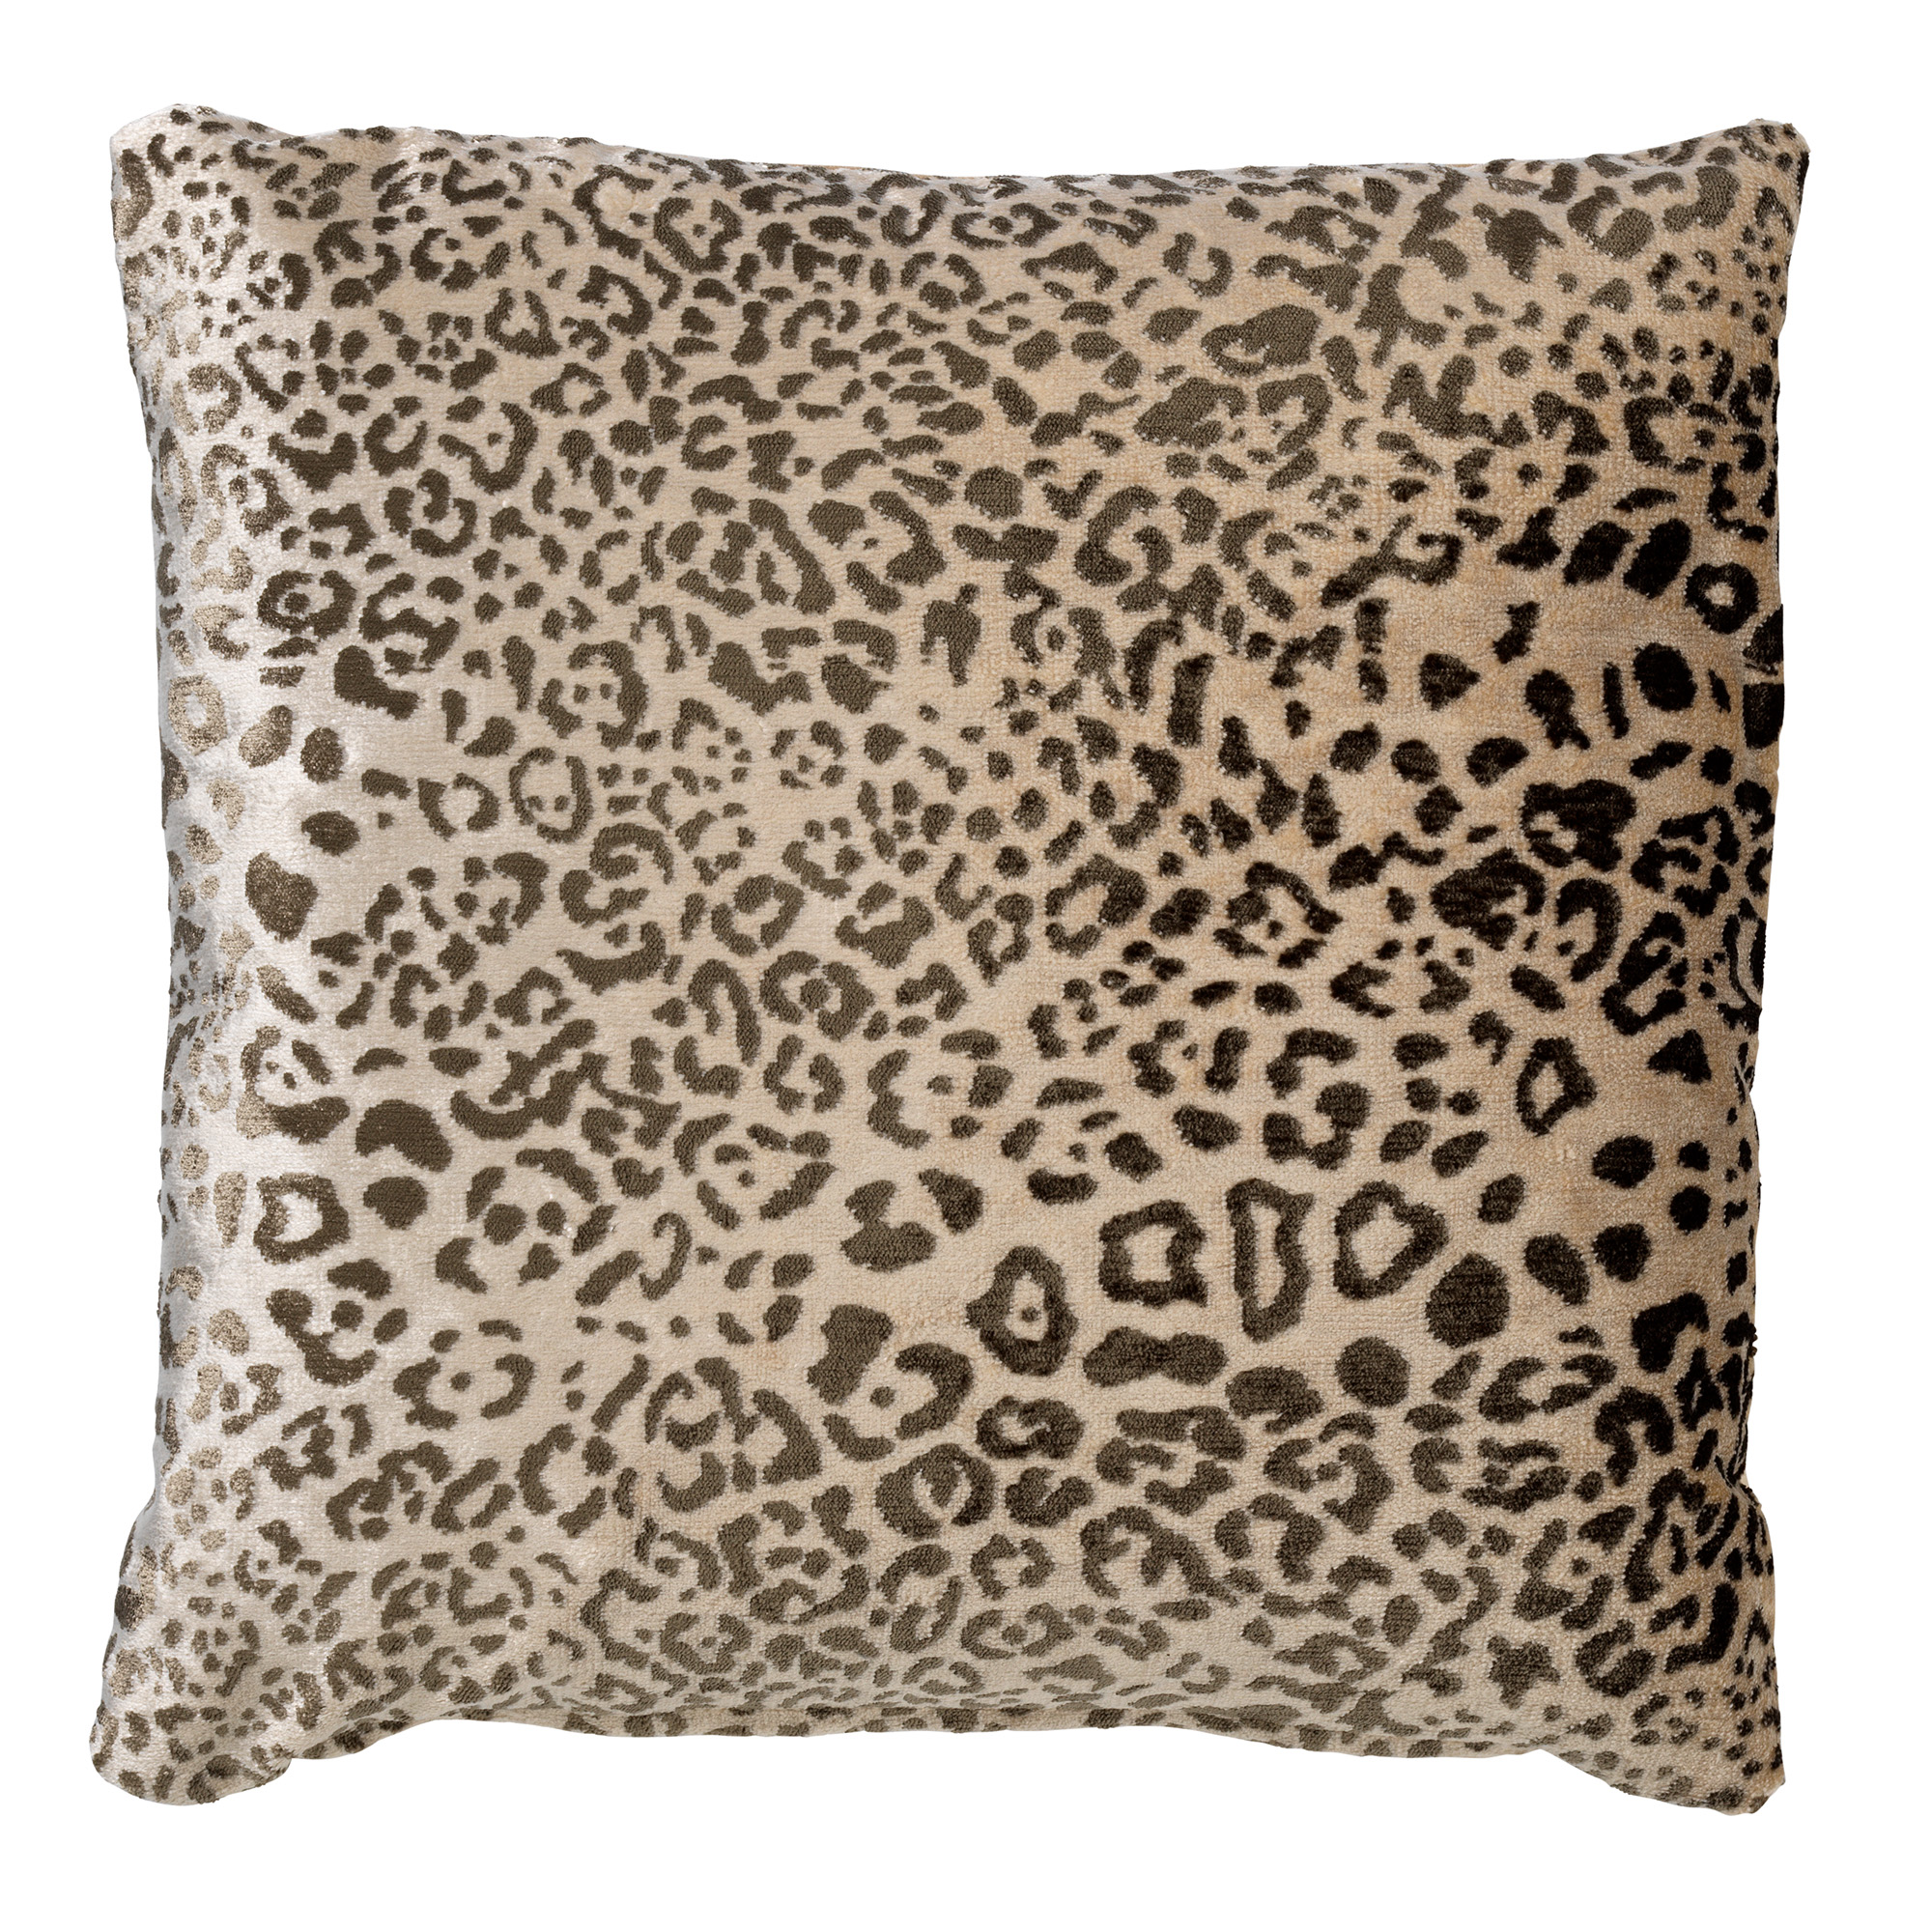 LEONELLE | Cushion | 45x45 cm Pumice Stone | Beige | Hoii | With luxury inner cushion